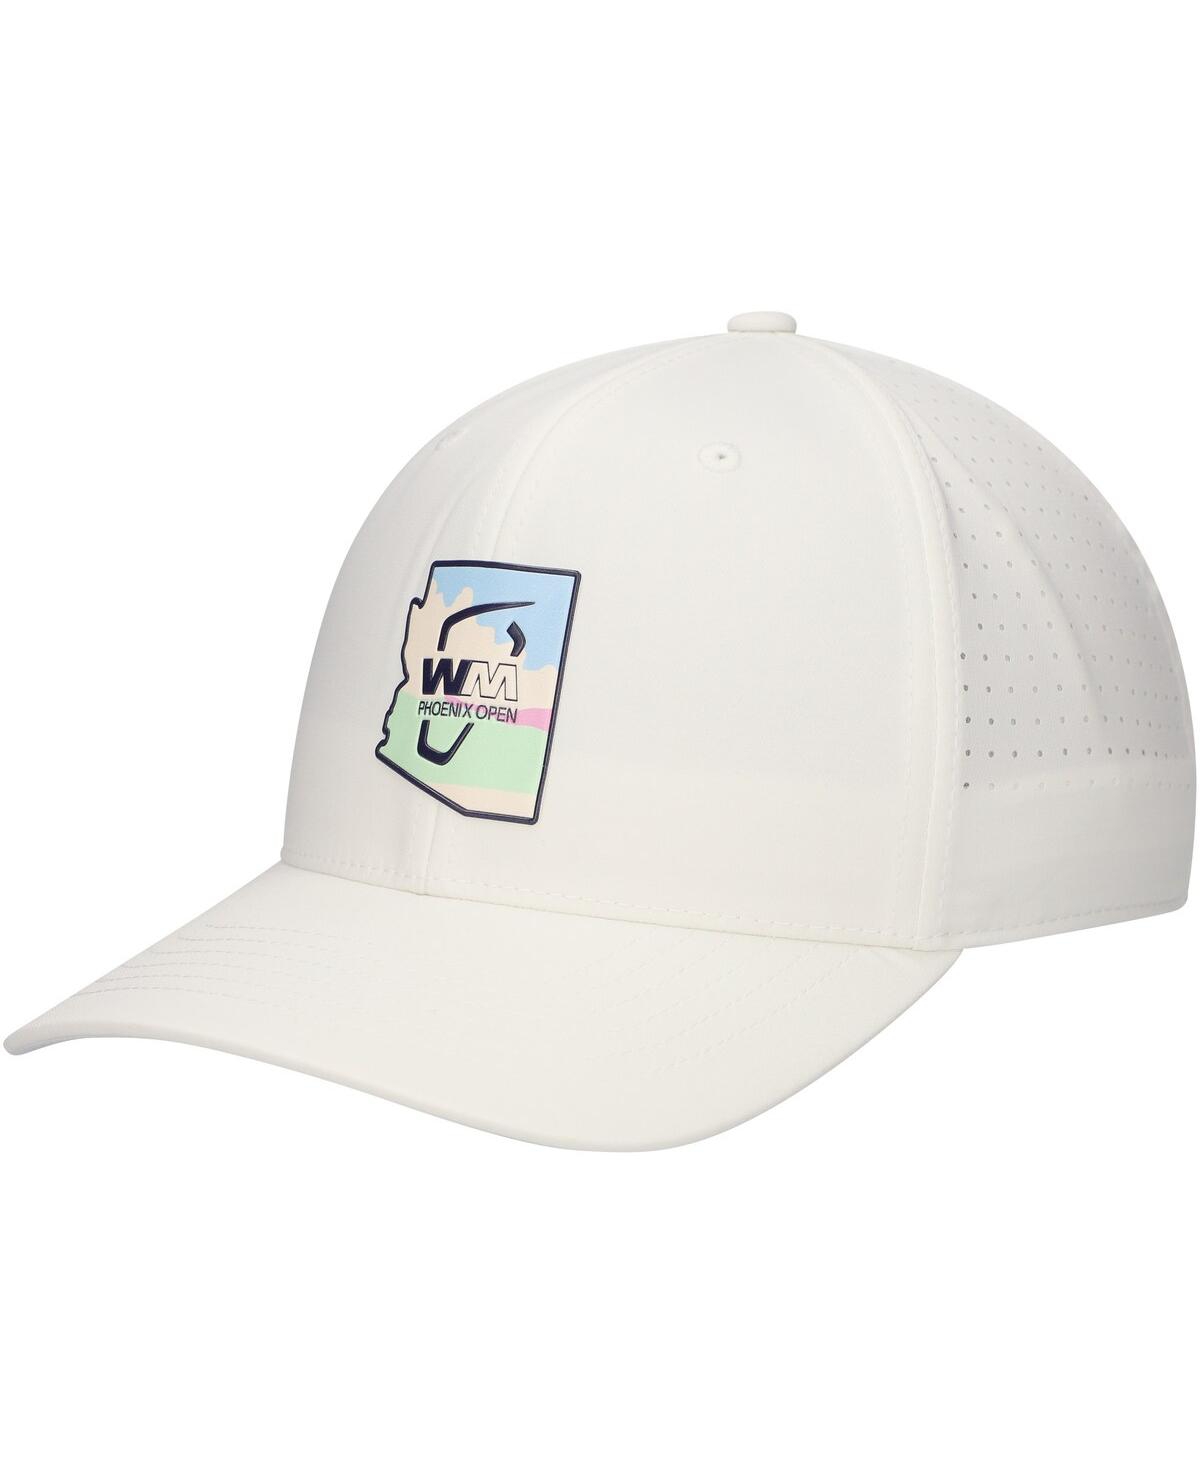 Men's White Wm Phoenix Open Tech Adjustable Hat - White